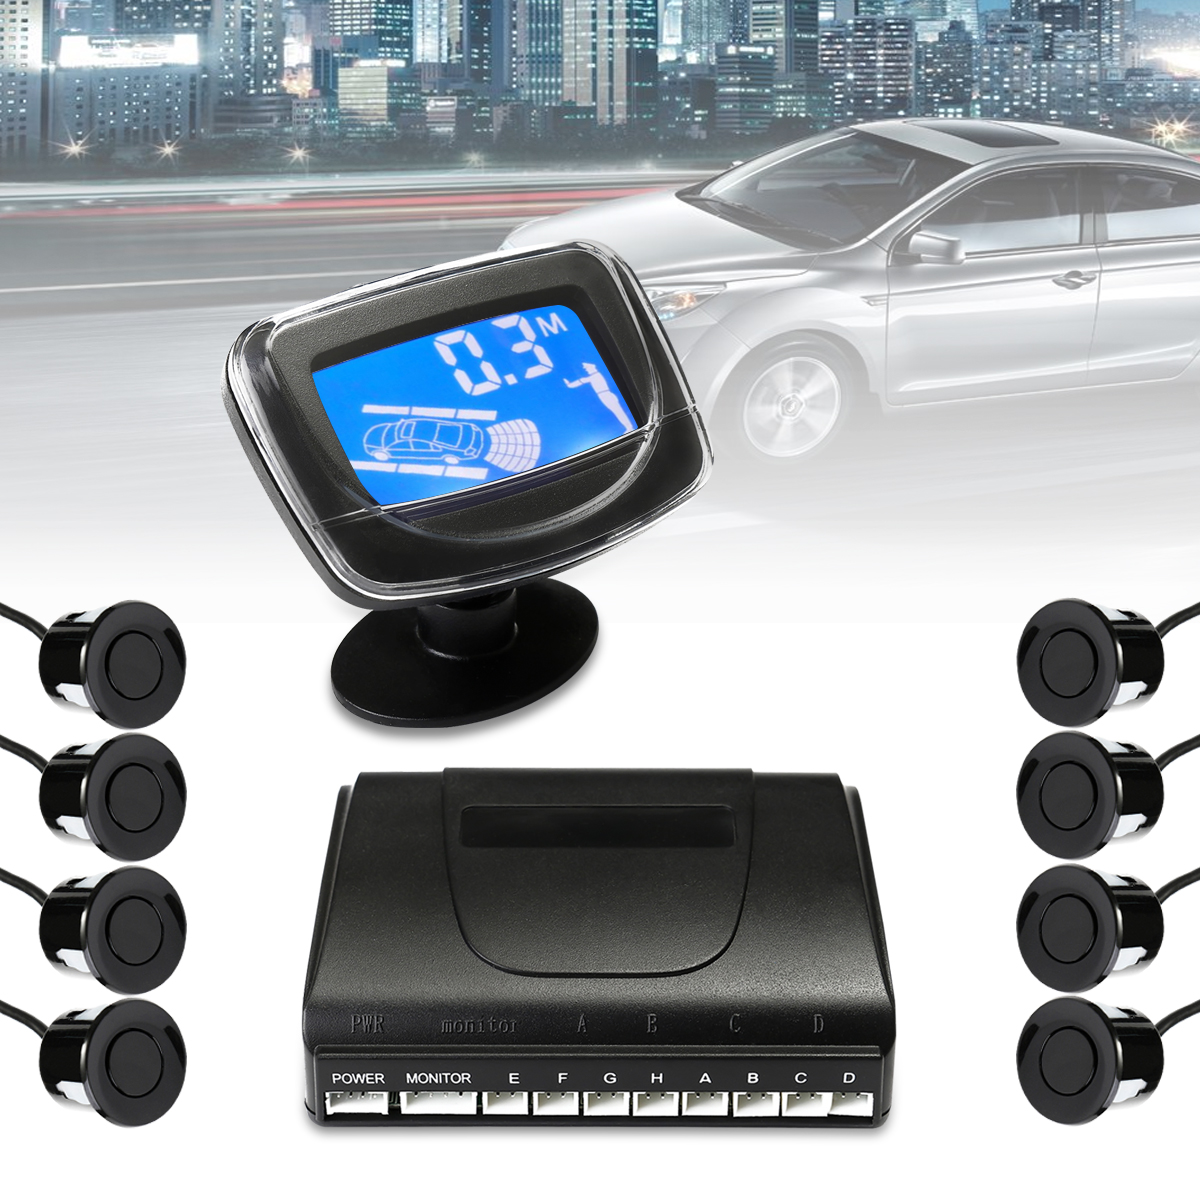 

Parking Reversing Rear And Front 8 Sensor Car Parking Sensors With Display Monitor